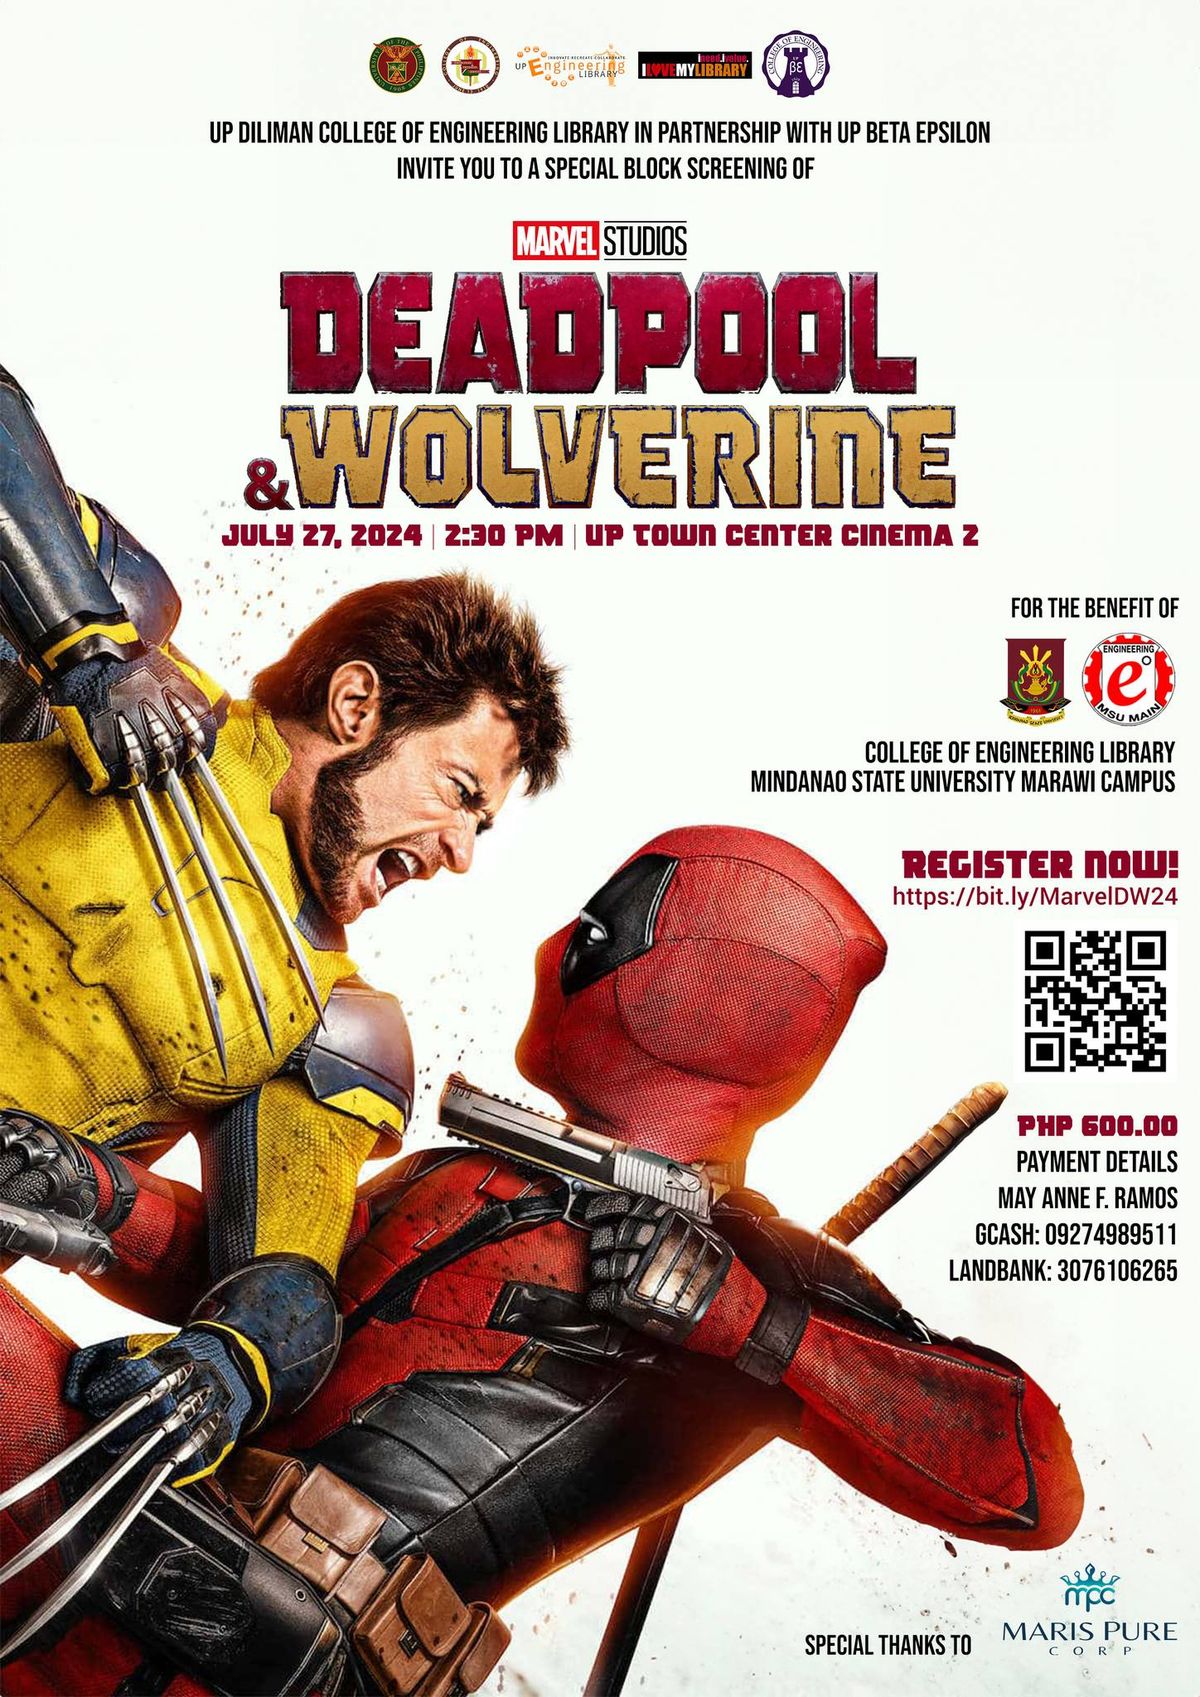 Deadpool & Wolverine Block Screening